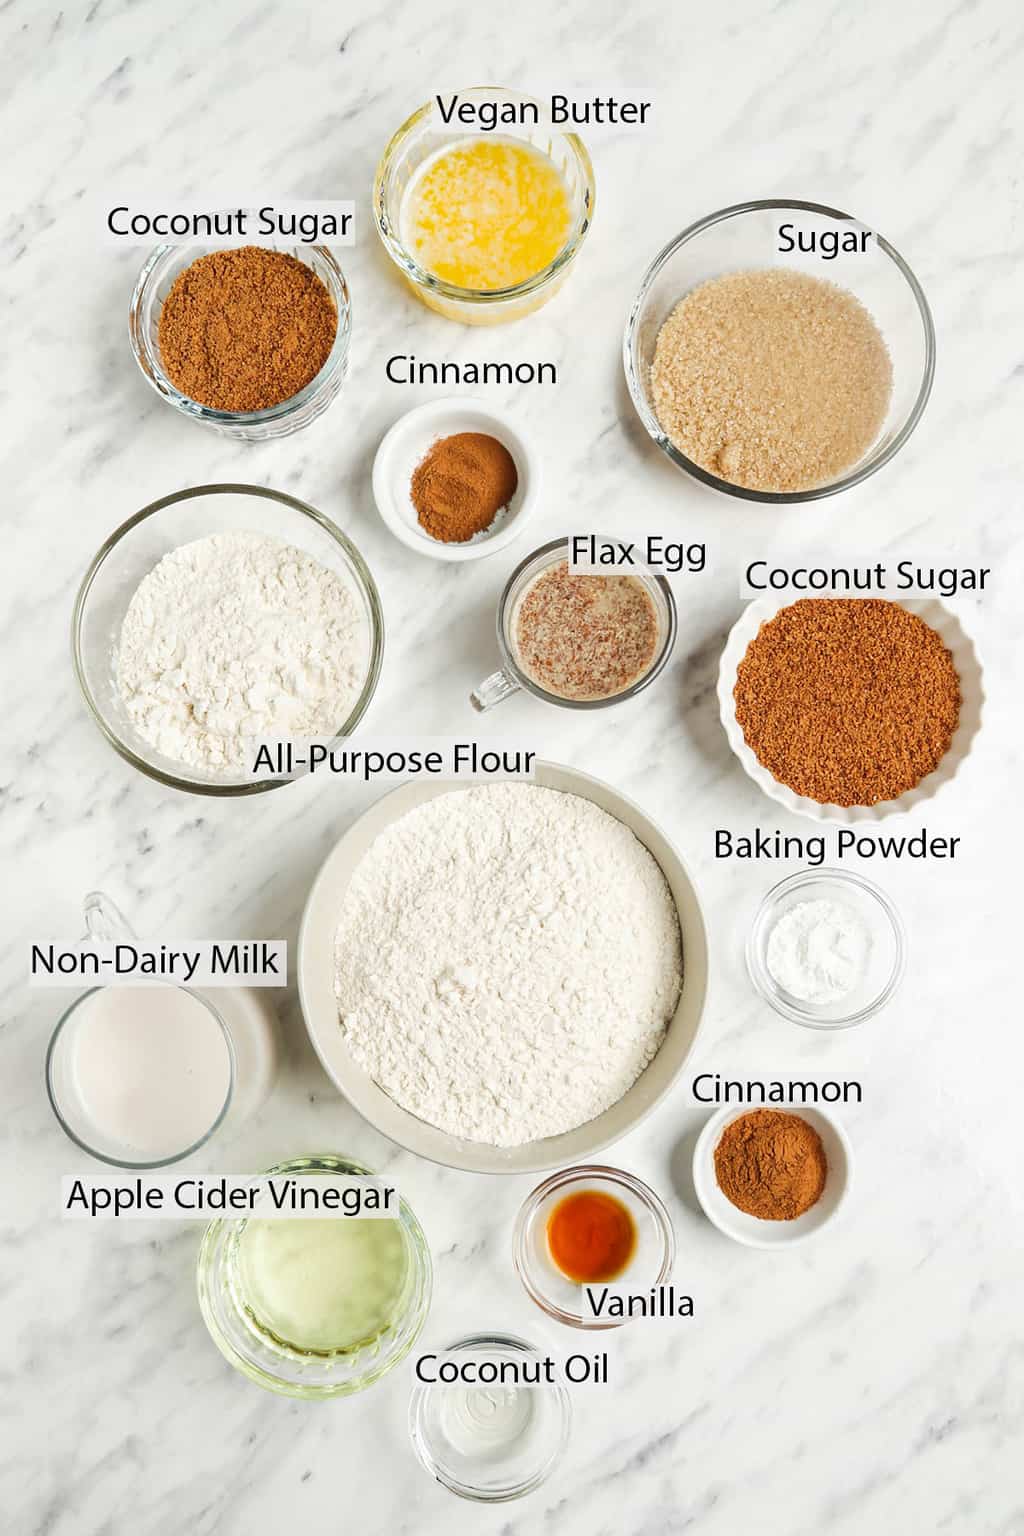 coconut sugar, cinnamon, sugar, flax egg, flour, baking powder, non dairy milk, apple cider vinegar, vanilla, and coconut oil